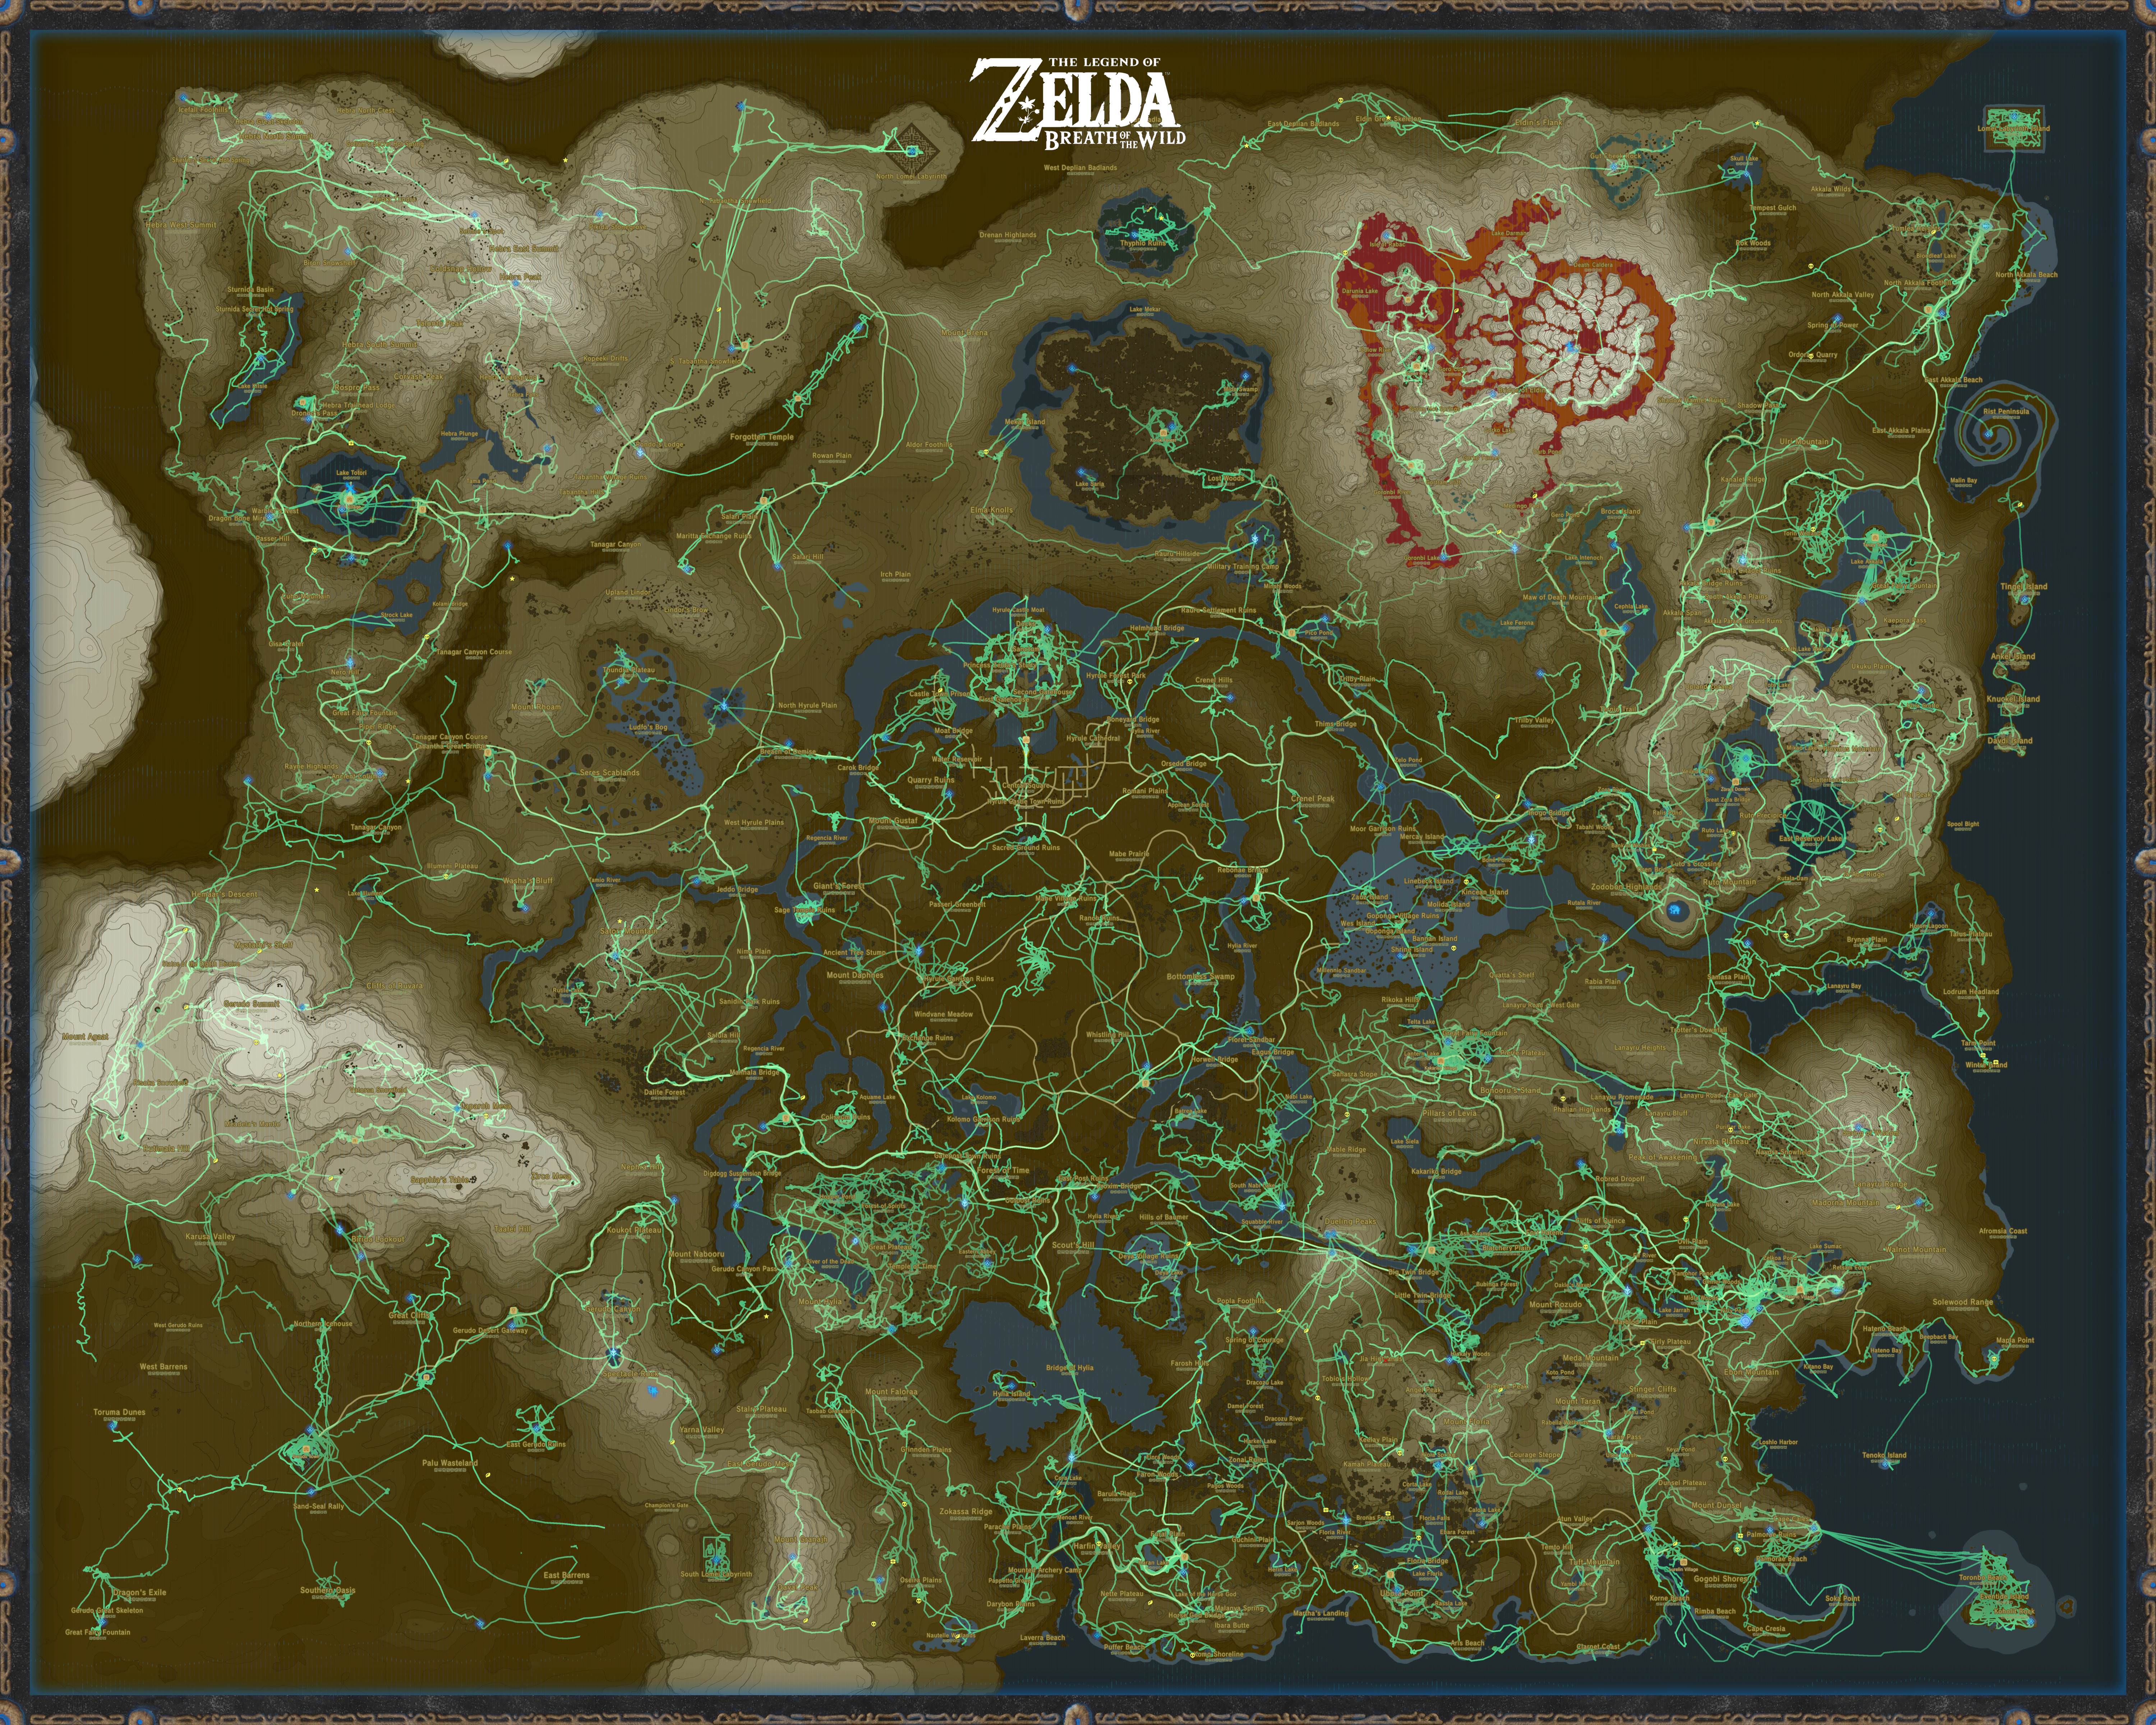 legend of zelda breath of the wild p o interactive map